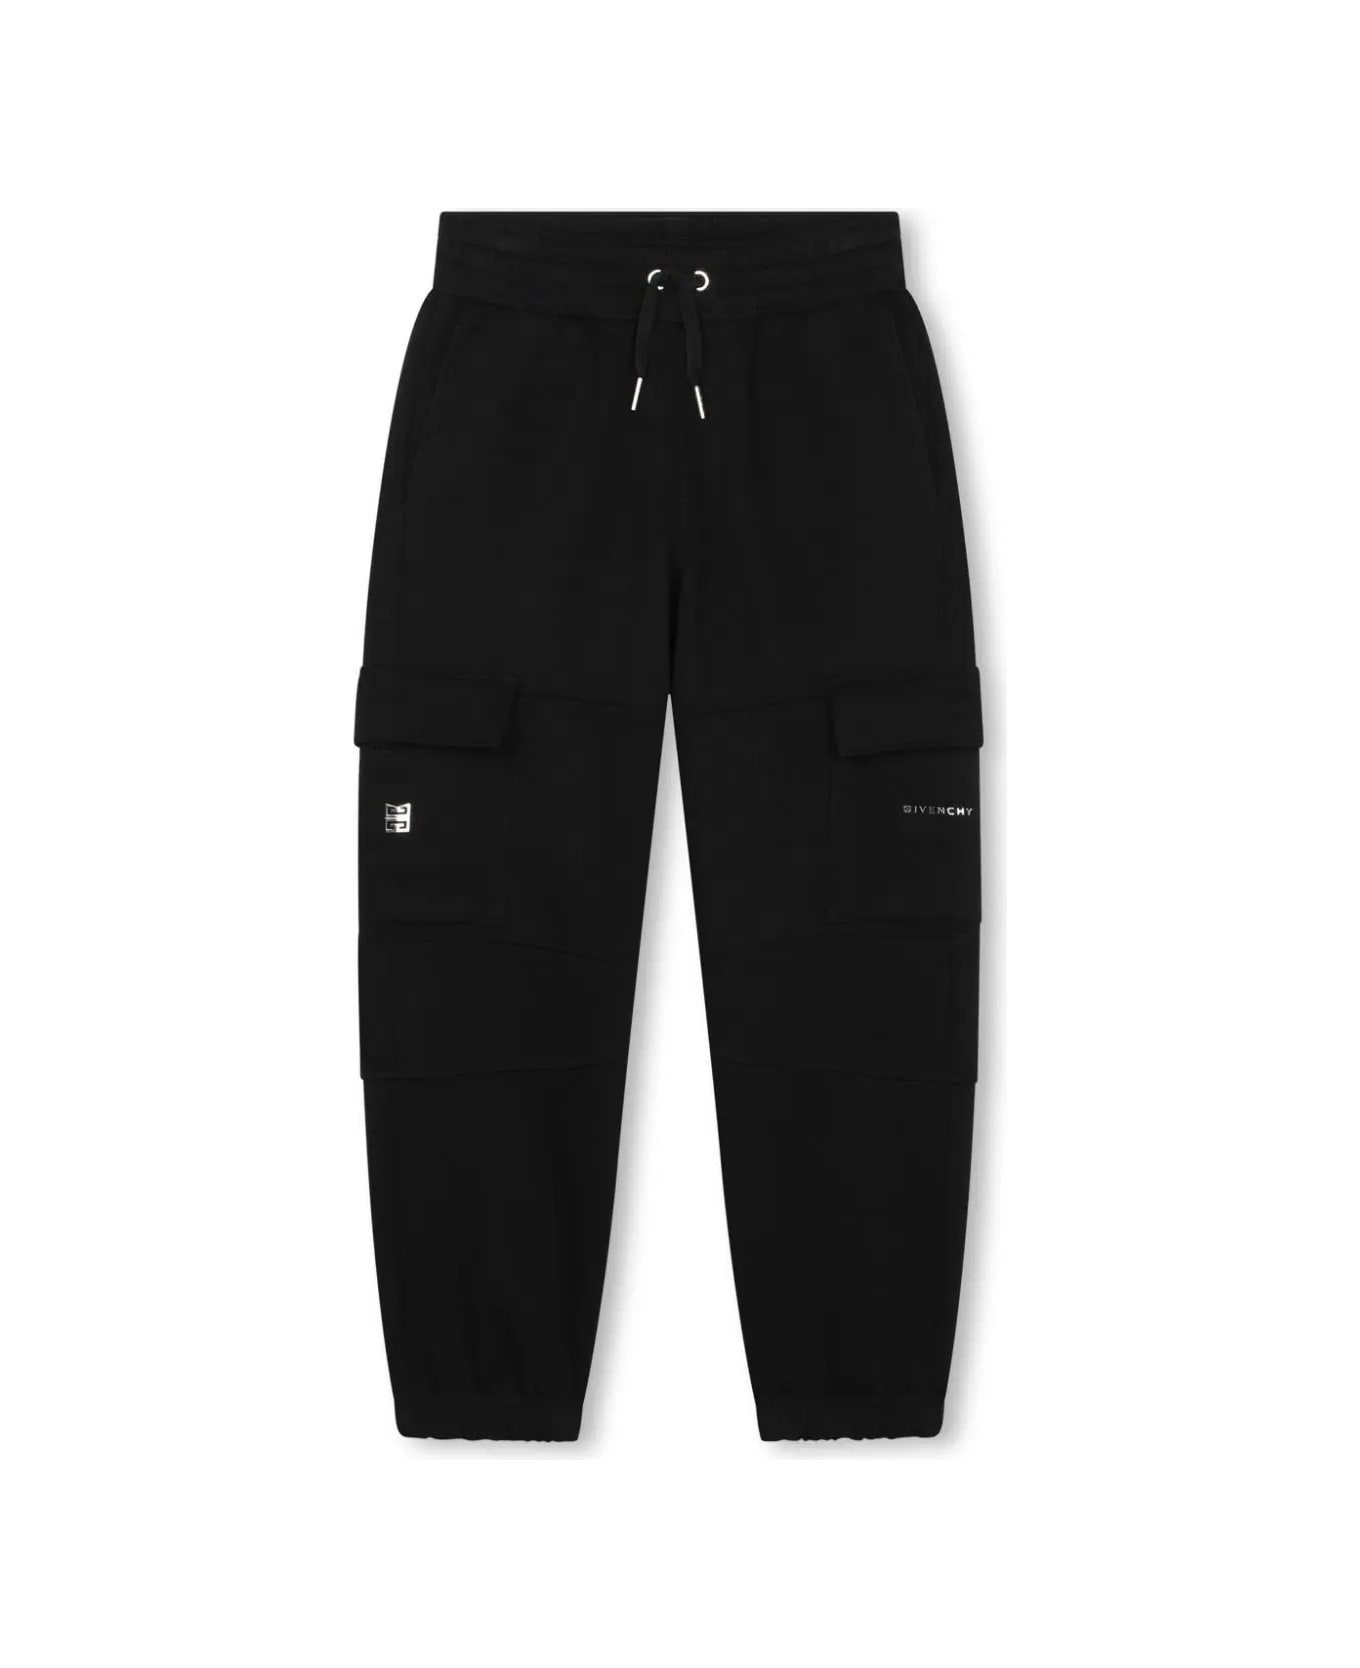 Givenchy Black Cargo Style Sports Pants - Black ボトムス